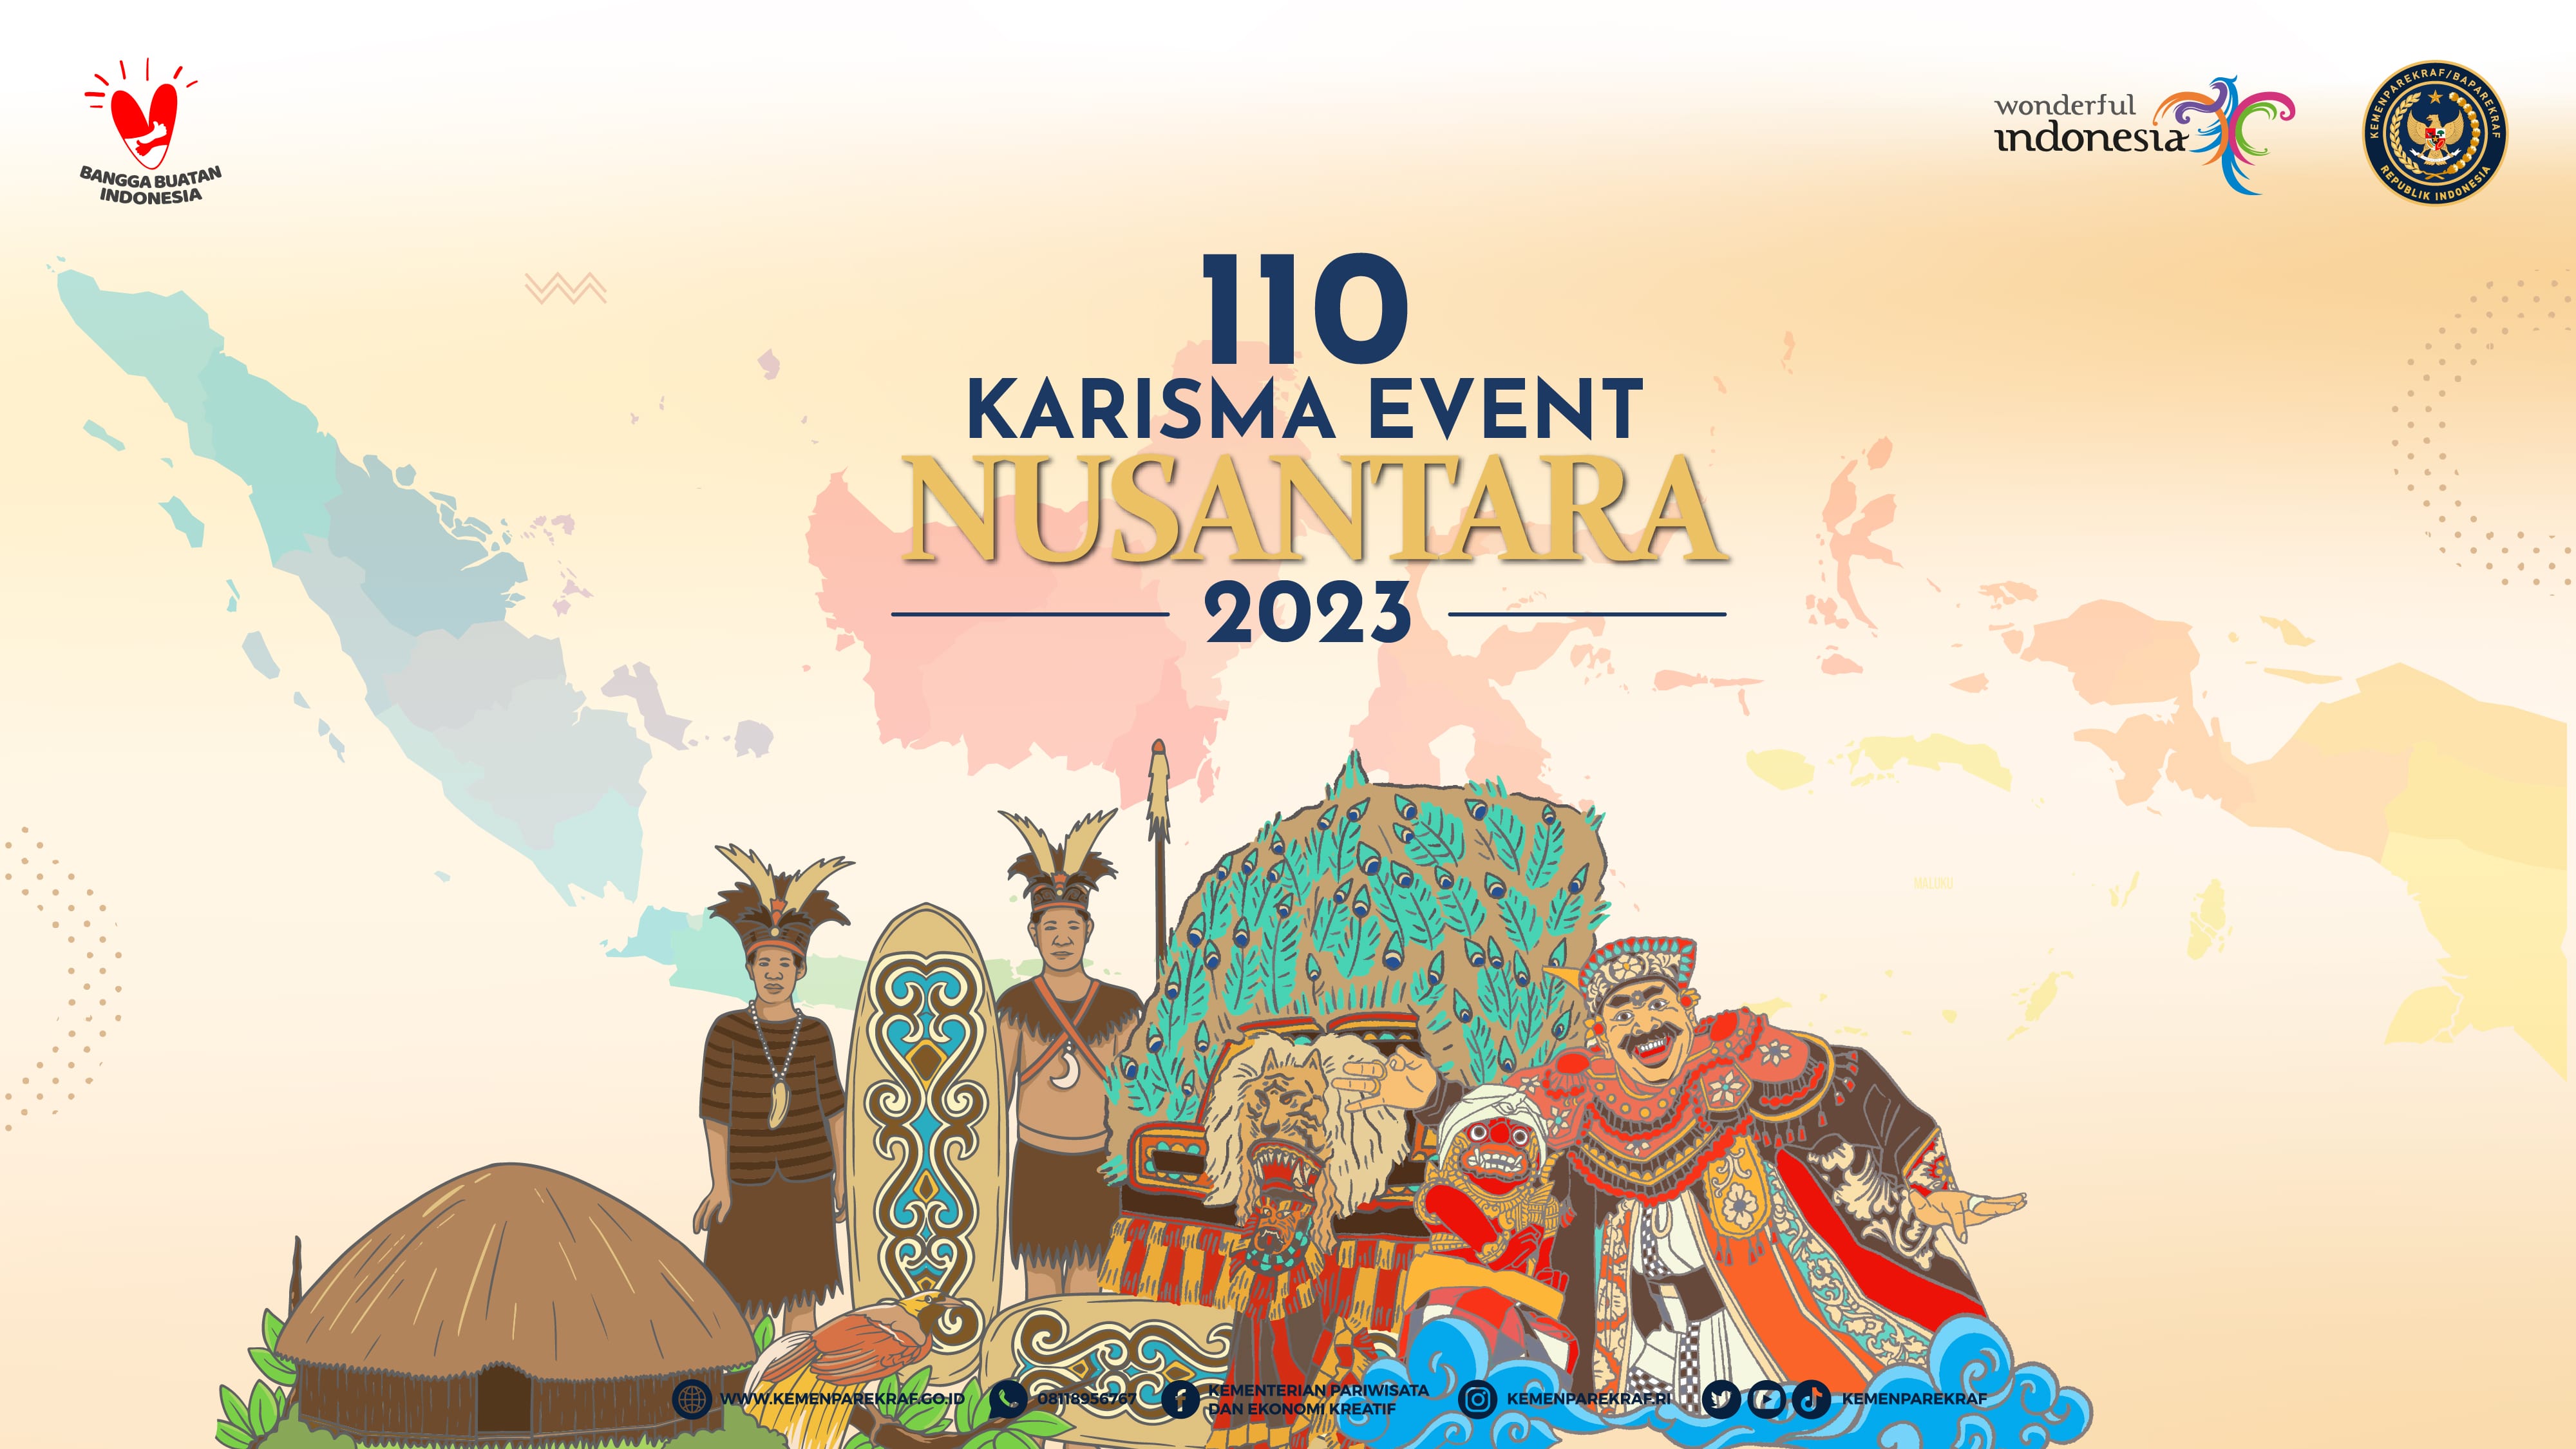 110 KARISMA EVENT NUSANTARA 2023